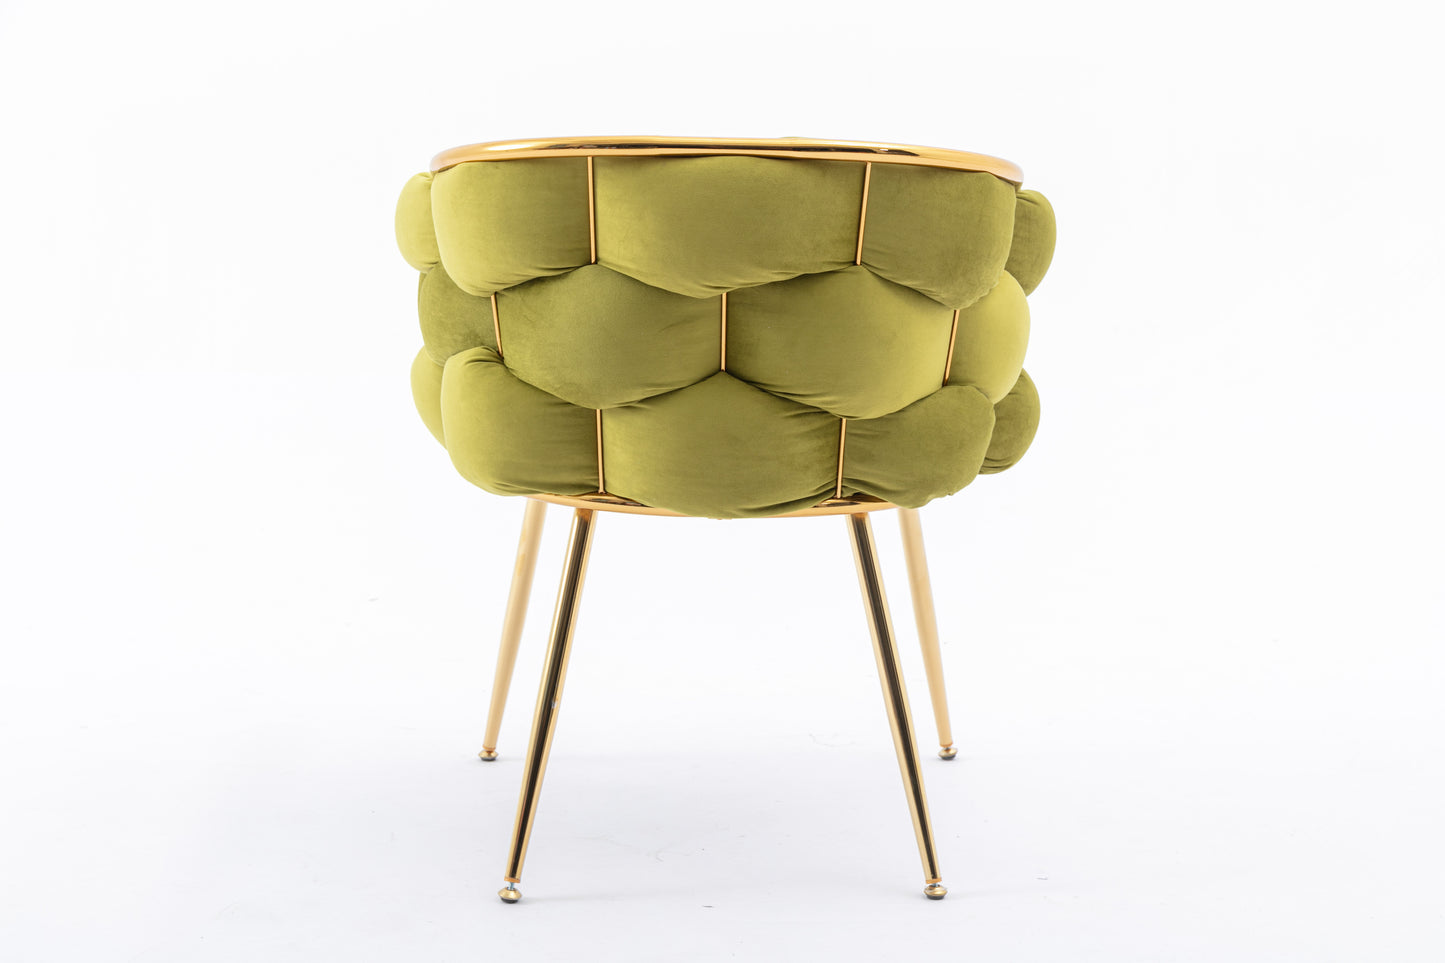 Olive Green Velvet Lounge Chairs: Set of 2